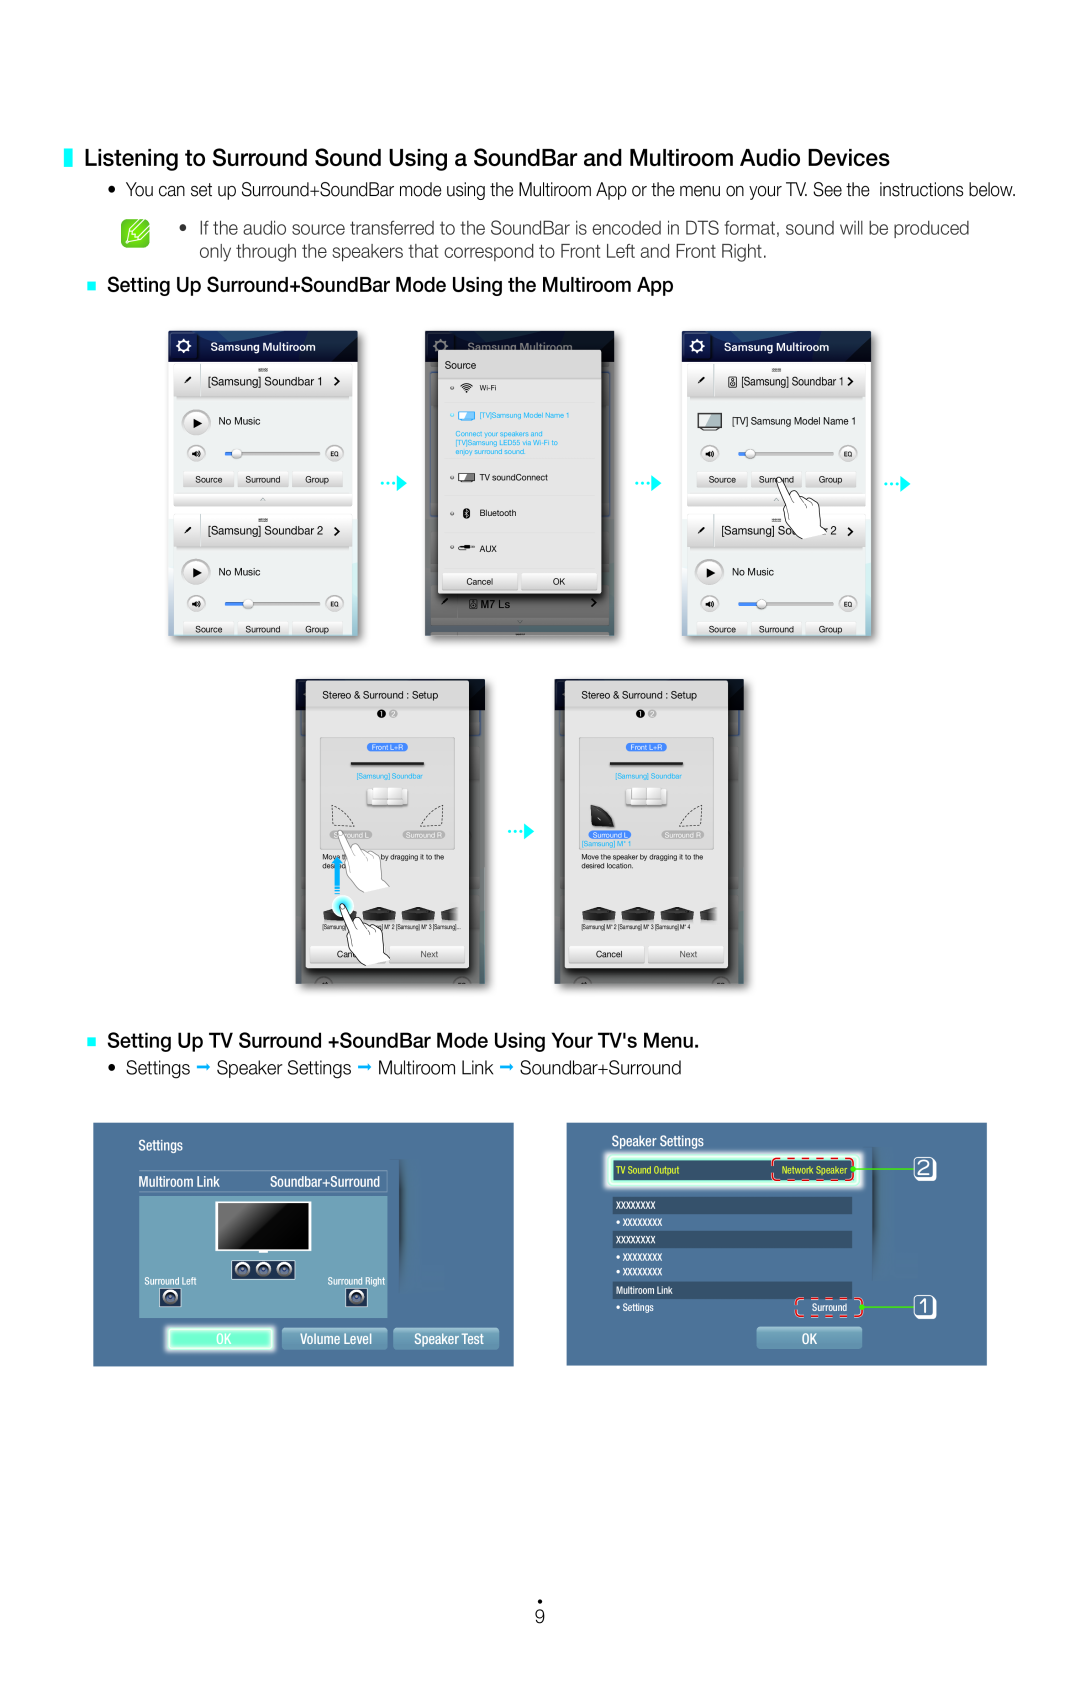 Samsung UA55HU7200RXSK `` Setting Up Surround+SoundBar Mode Using the Multiroom App, Settings, Multiroom Link, Source 